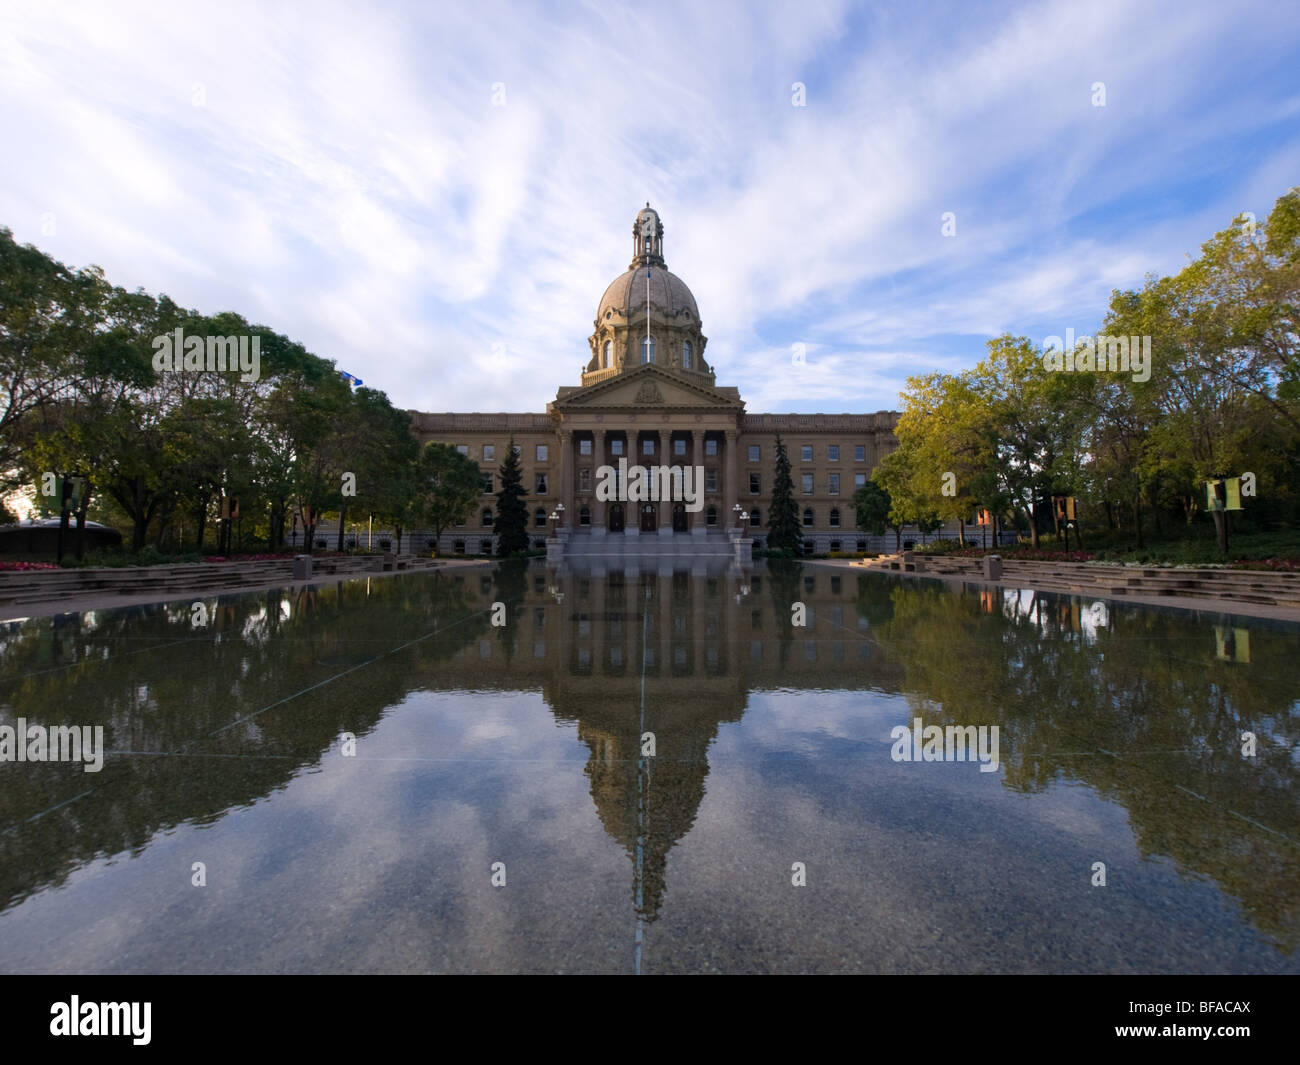 The Alberta Legislature Building in Edmonton, Canada. Stock Photo